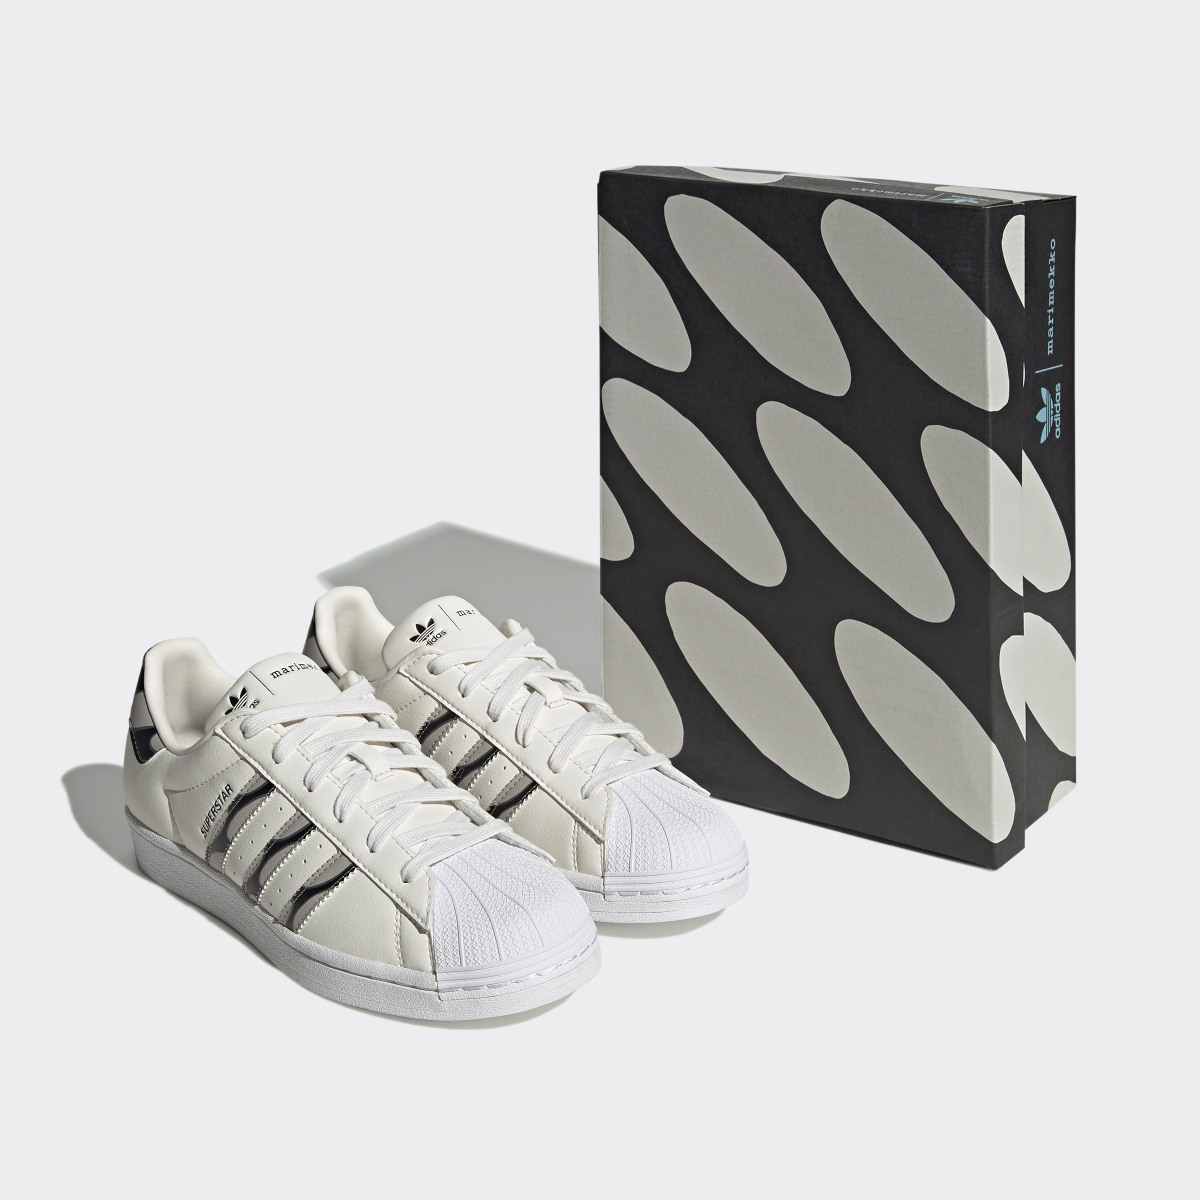 Adidas Chaussure adidas x Marimekko Superstar. 10